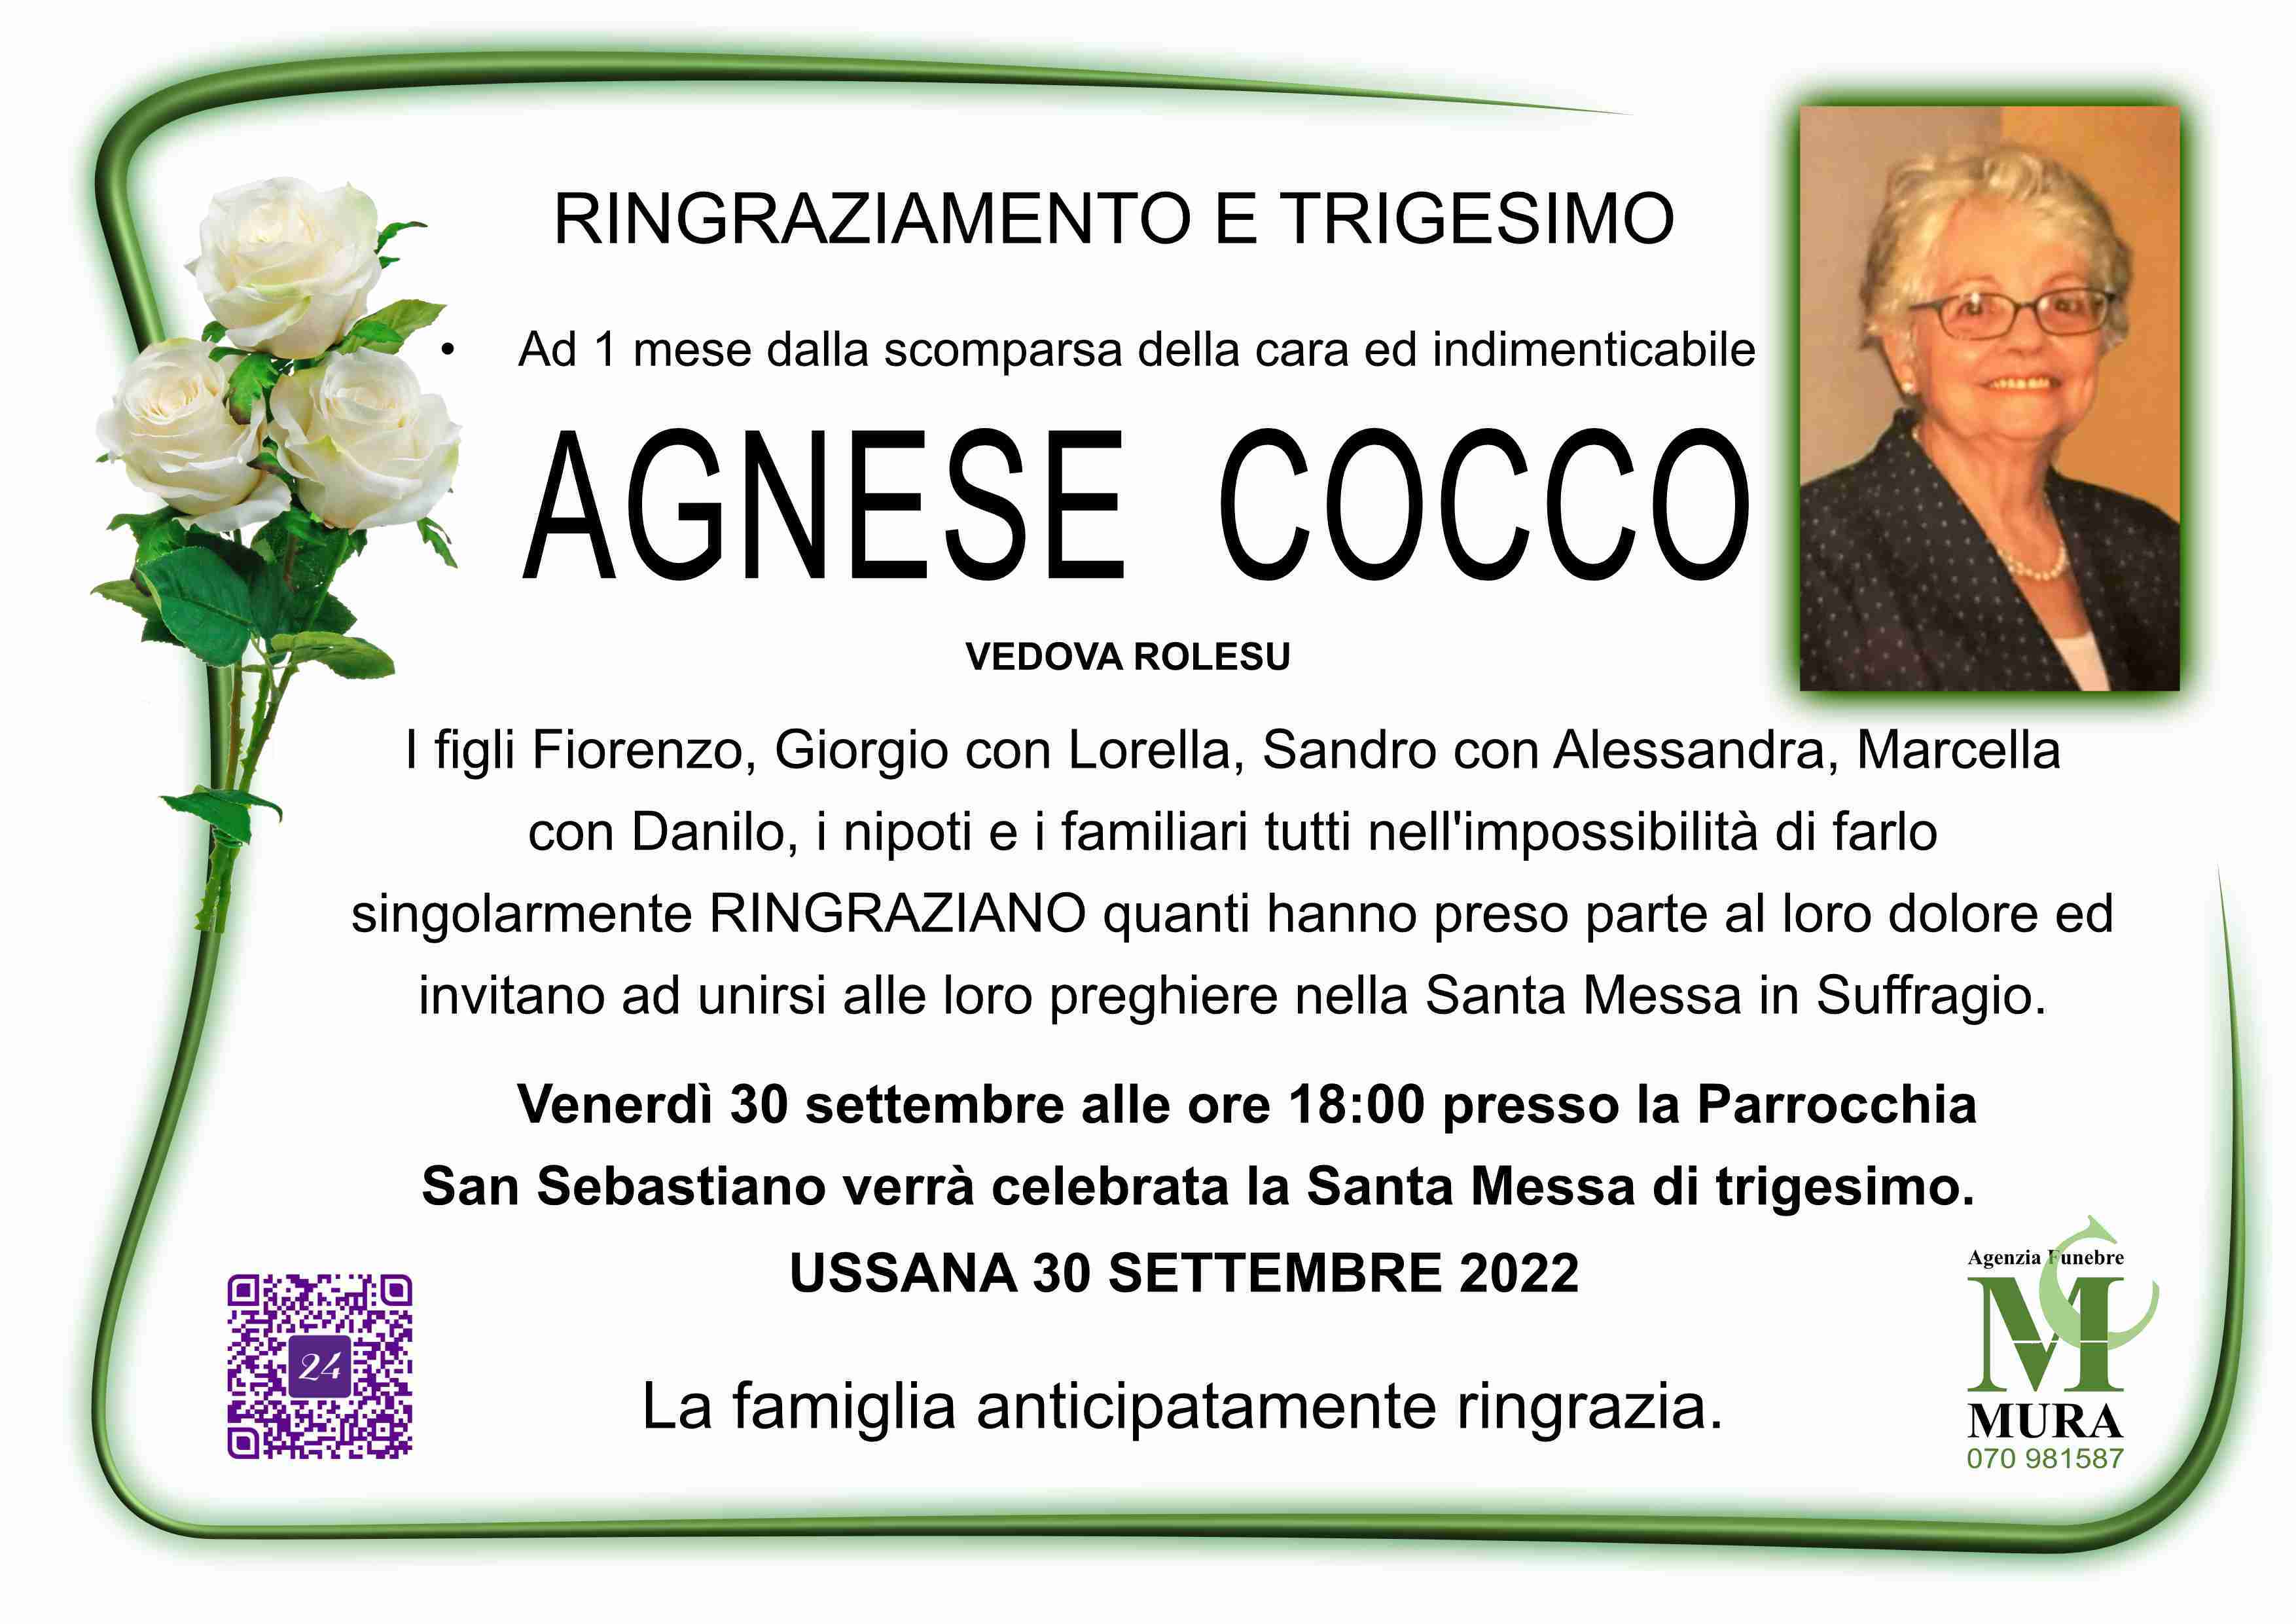 Agnese Cocco